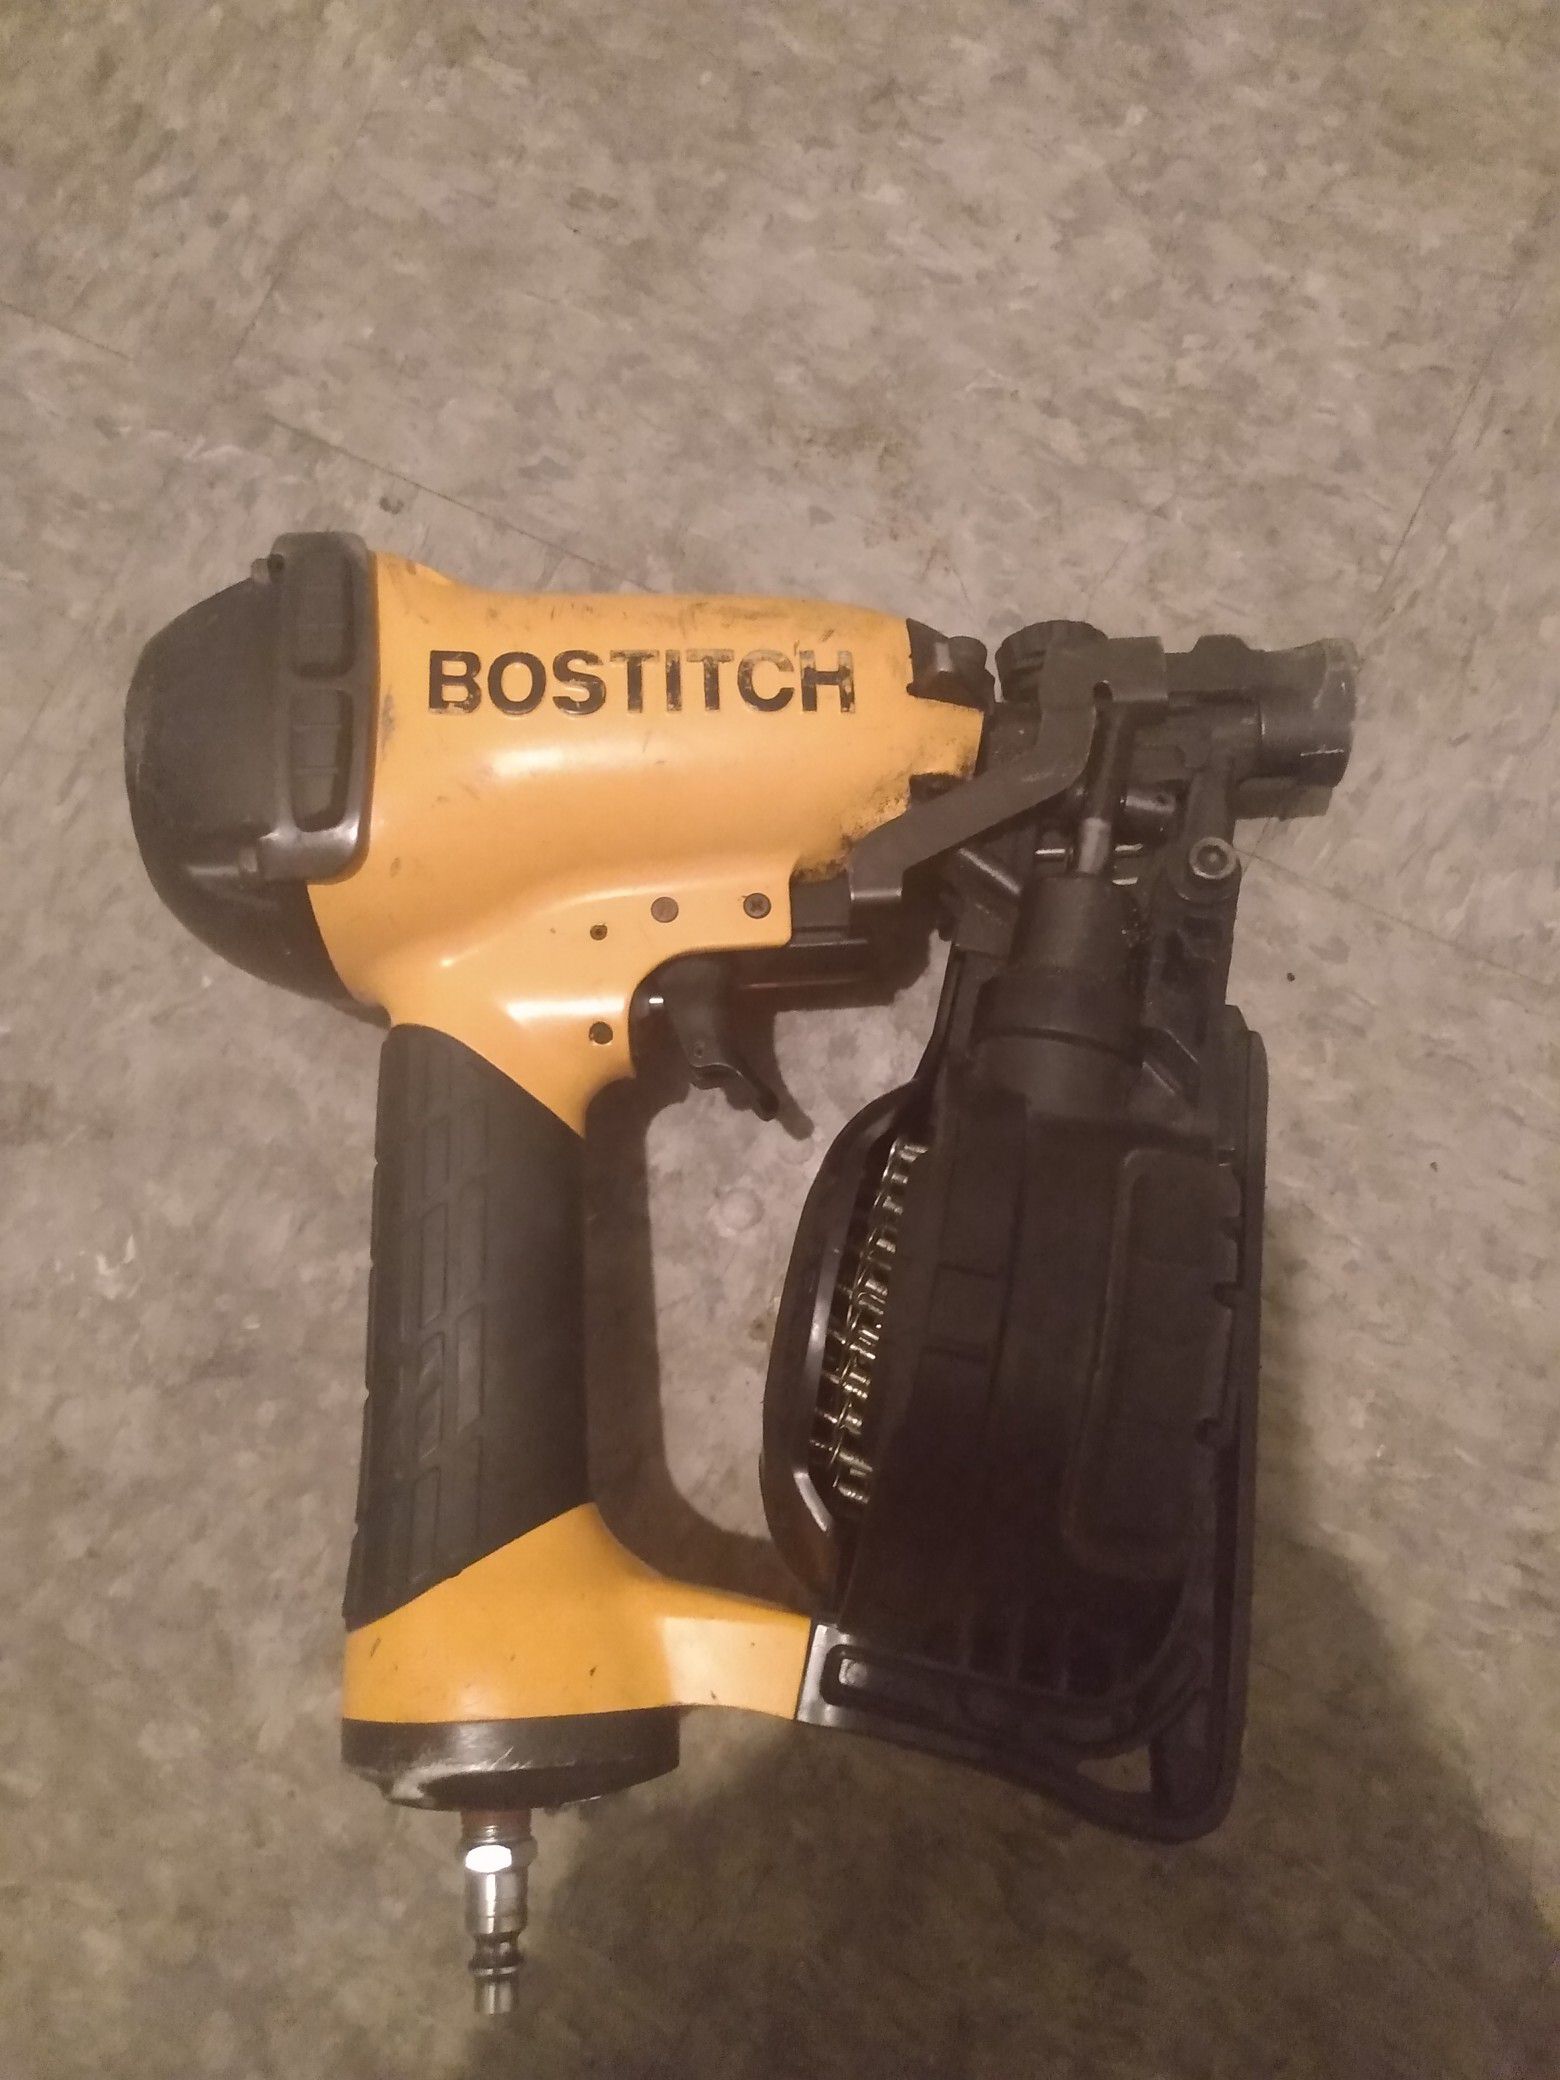 Bostitch roofing nail gun